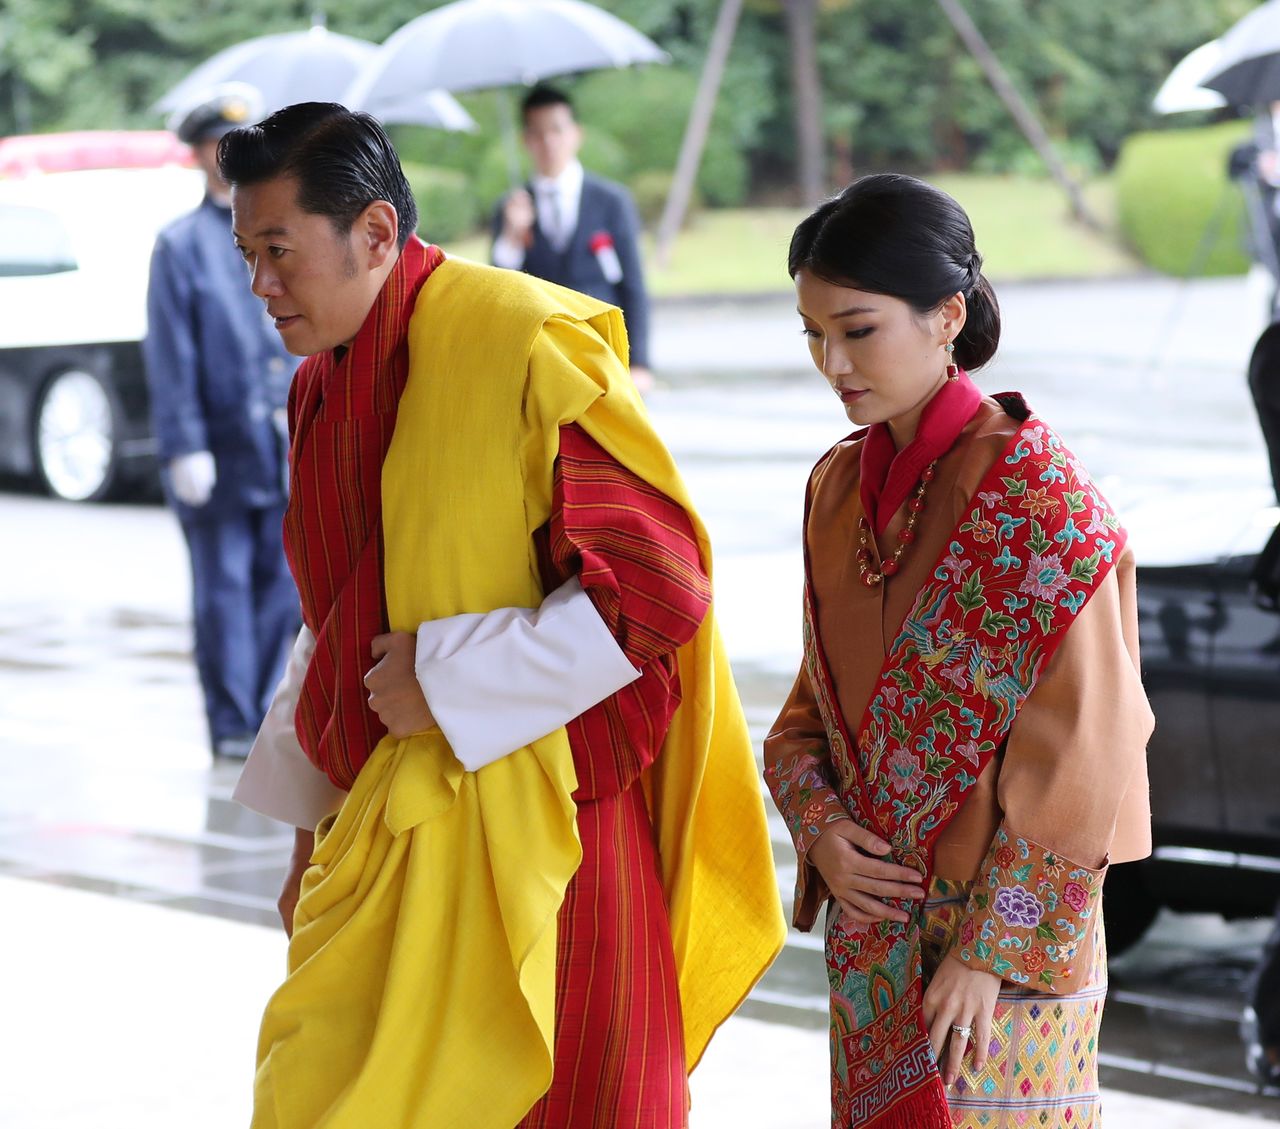 King Jigme Khesar Namgyel Wangchuck and Queen Jetsun Pema of Bhutan arrive at the palace. (© Jiji)